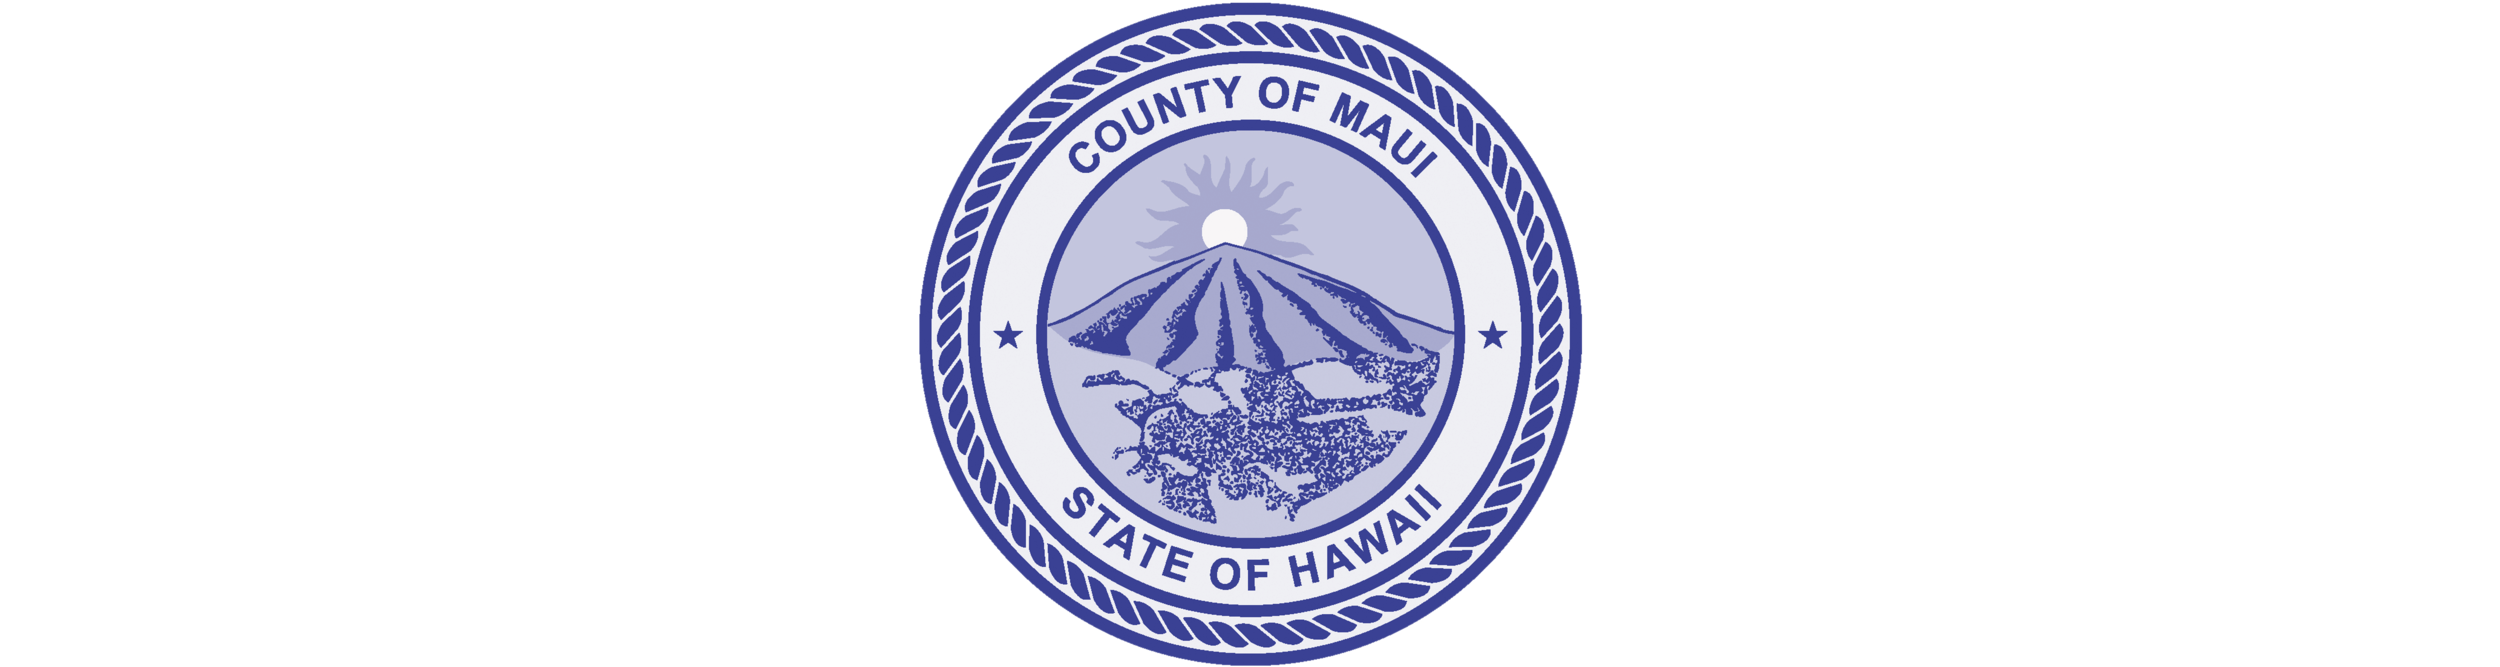 HPHA-ресурсы-лого-Мауи-Каунти.пнг